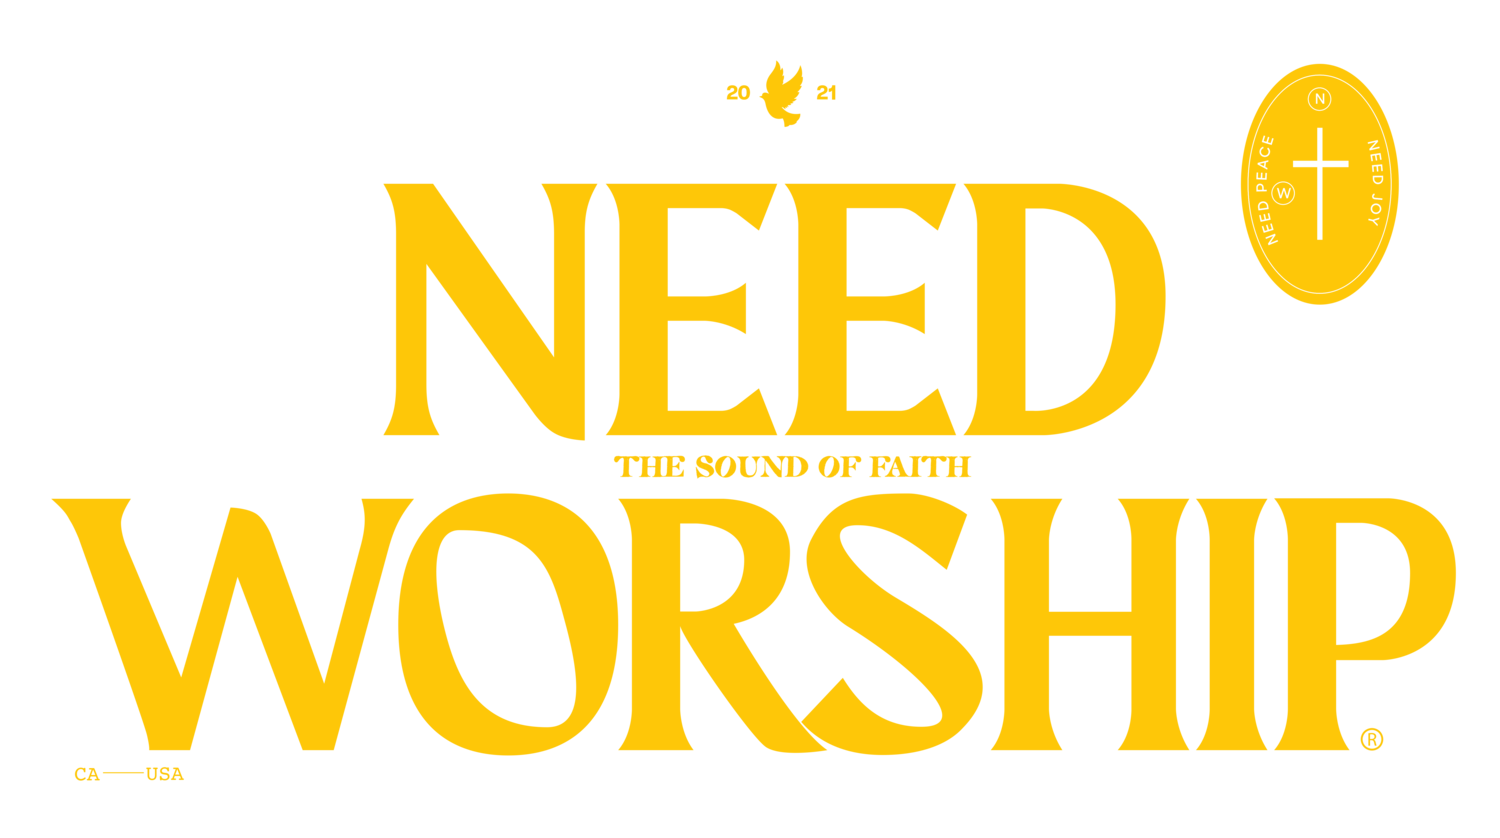 Need Worship